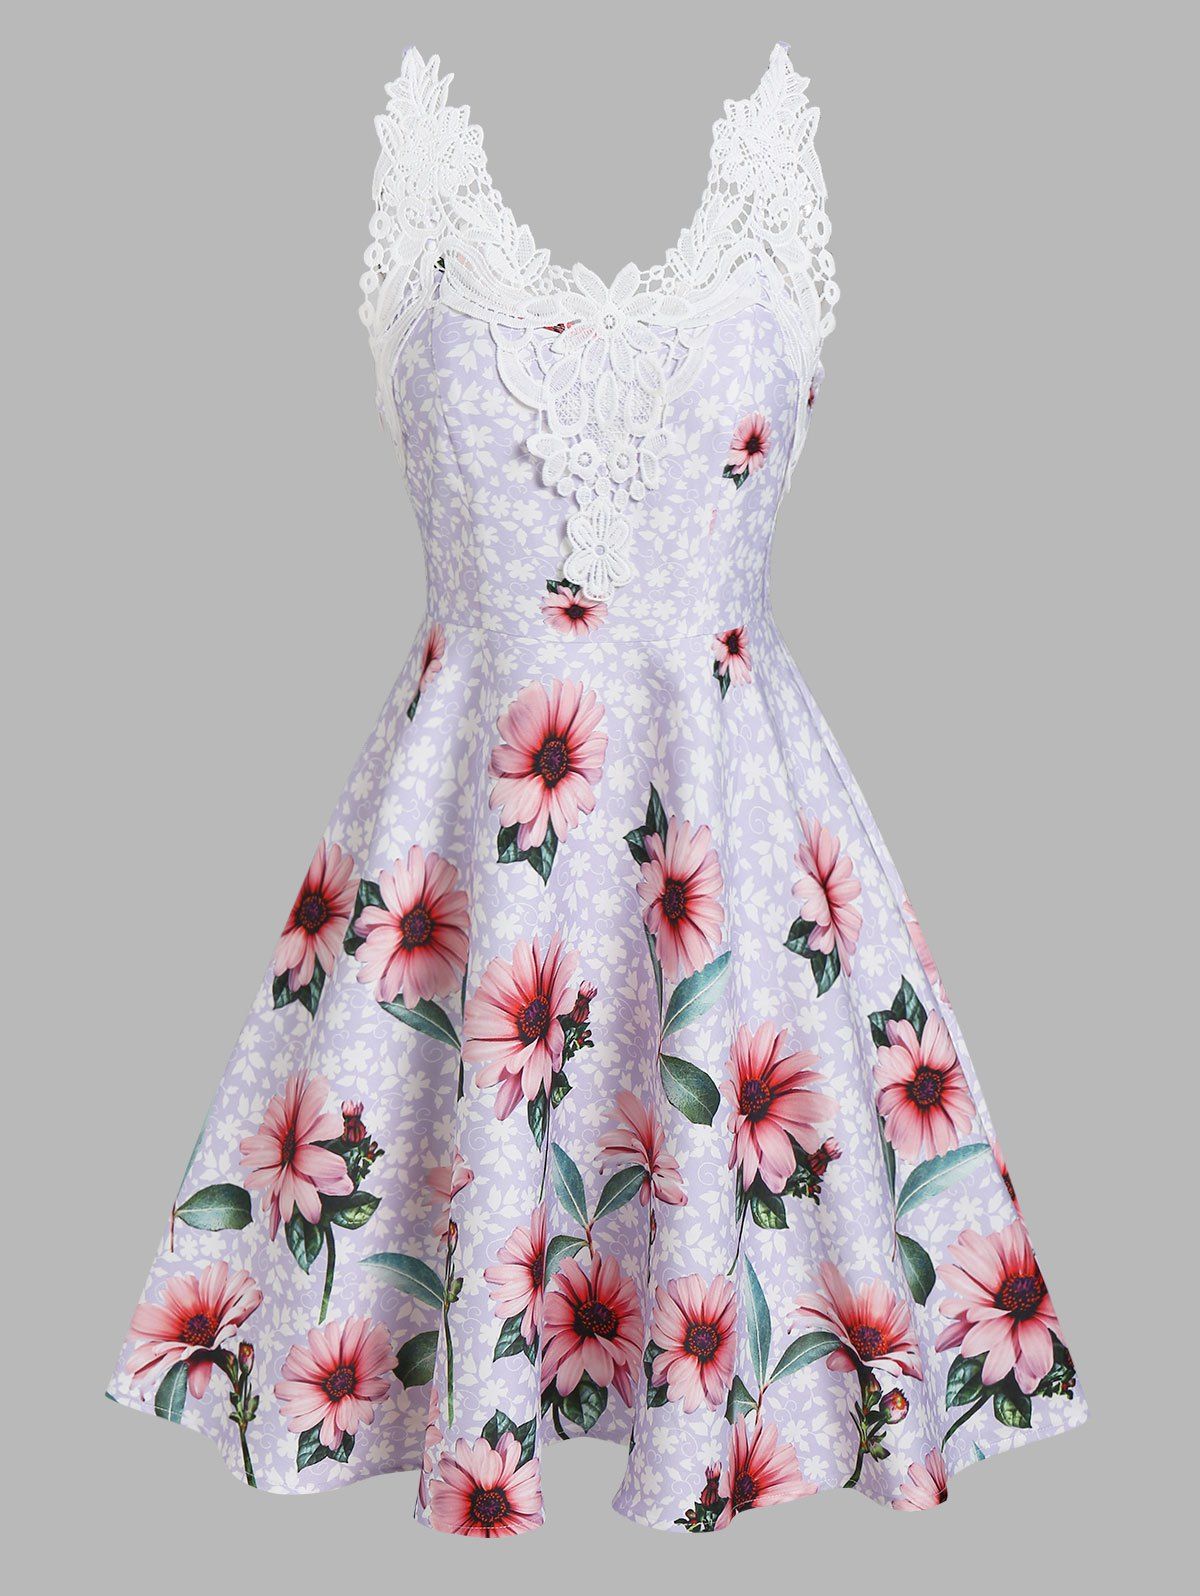 Ditsy Flower Print Cottagecore A Line Mini Sundress Floral Corchet Lace Insert Skater Dress - LIGHT PURPLE XL